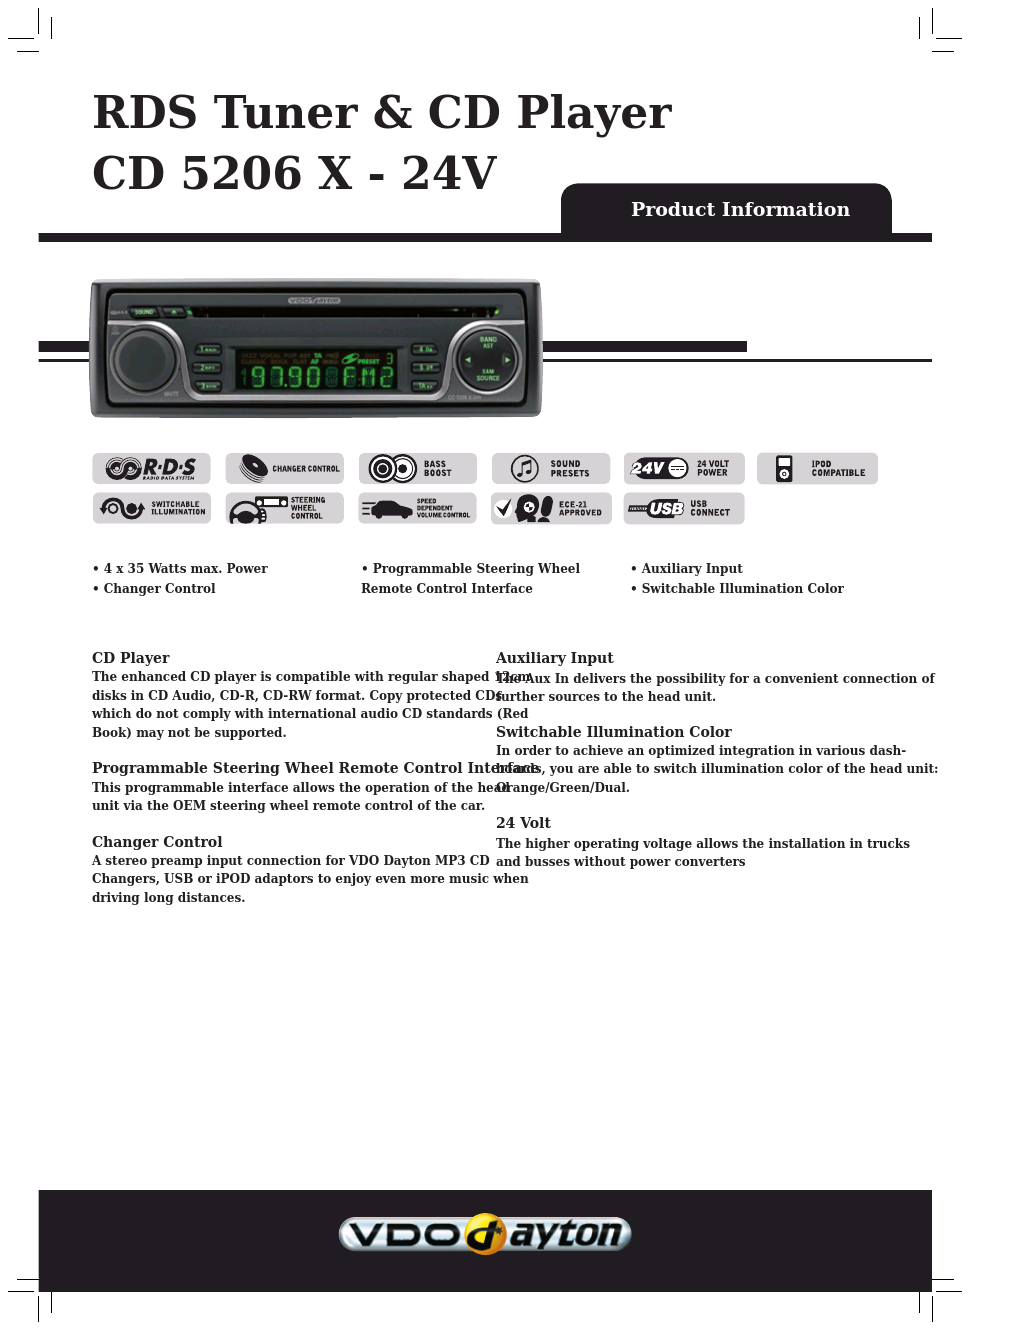 CD 5206 X - 24V (Page 1)